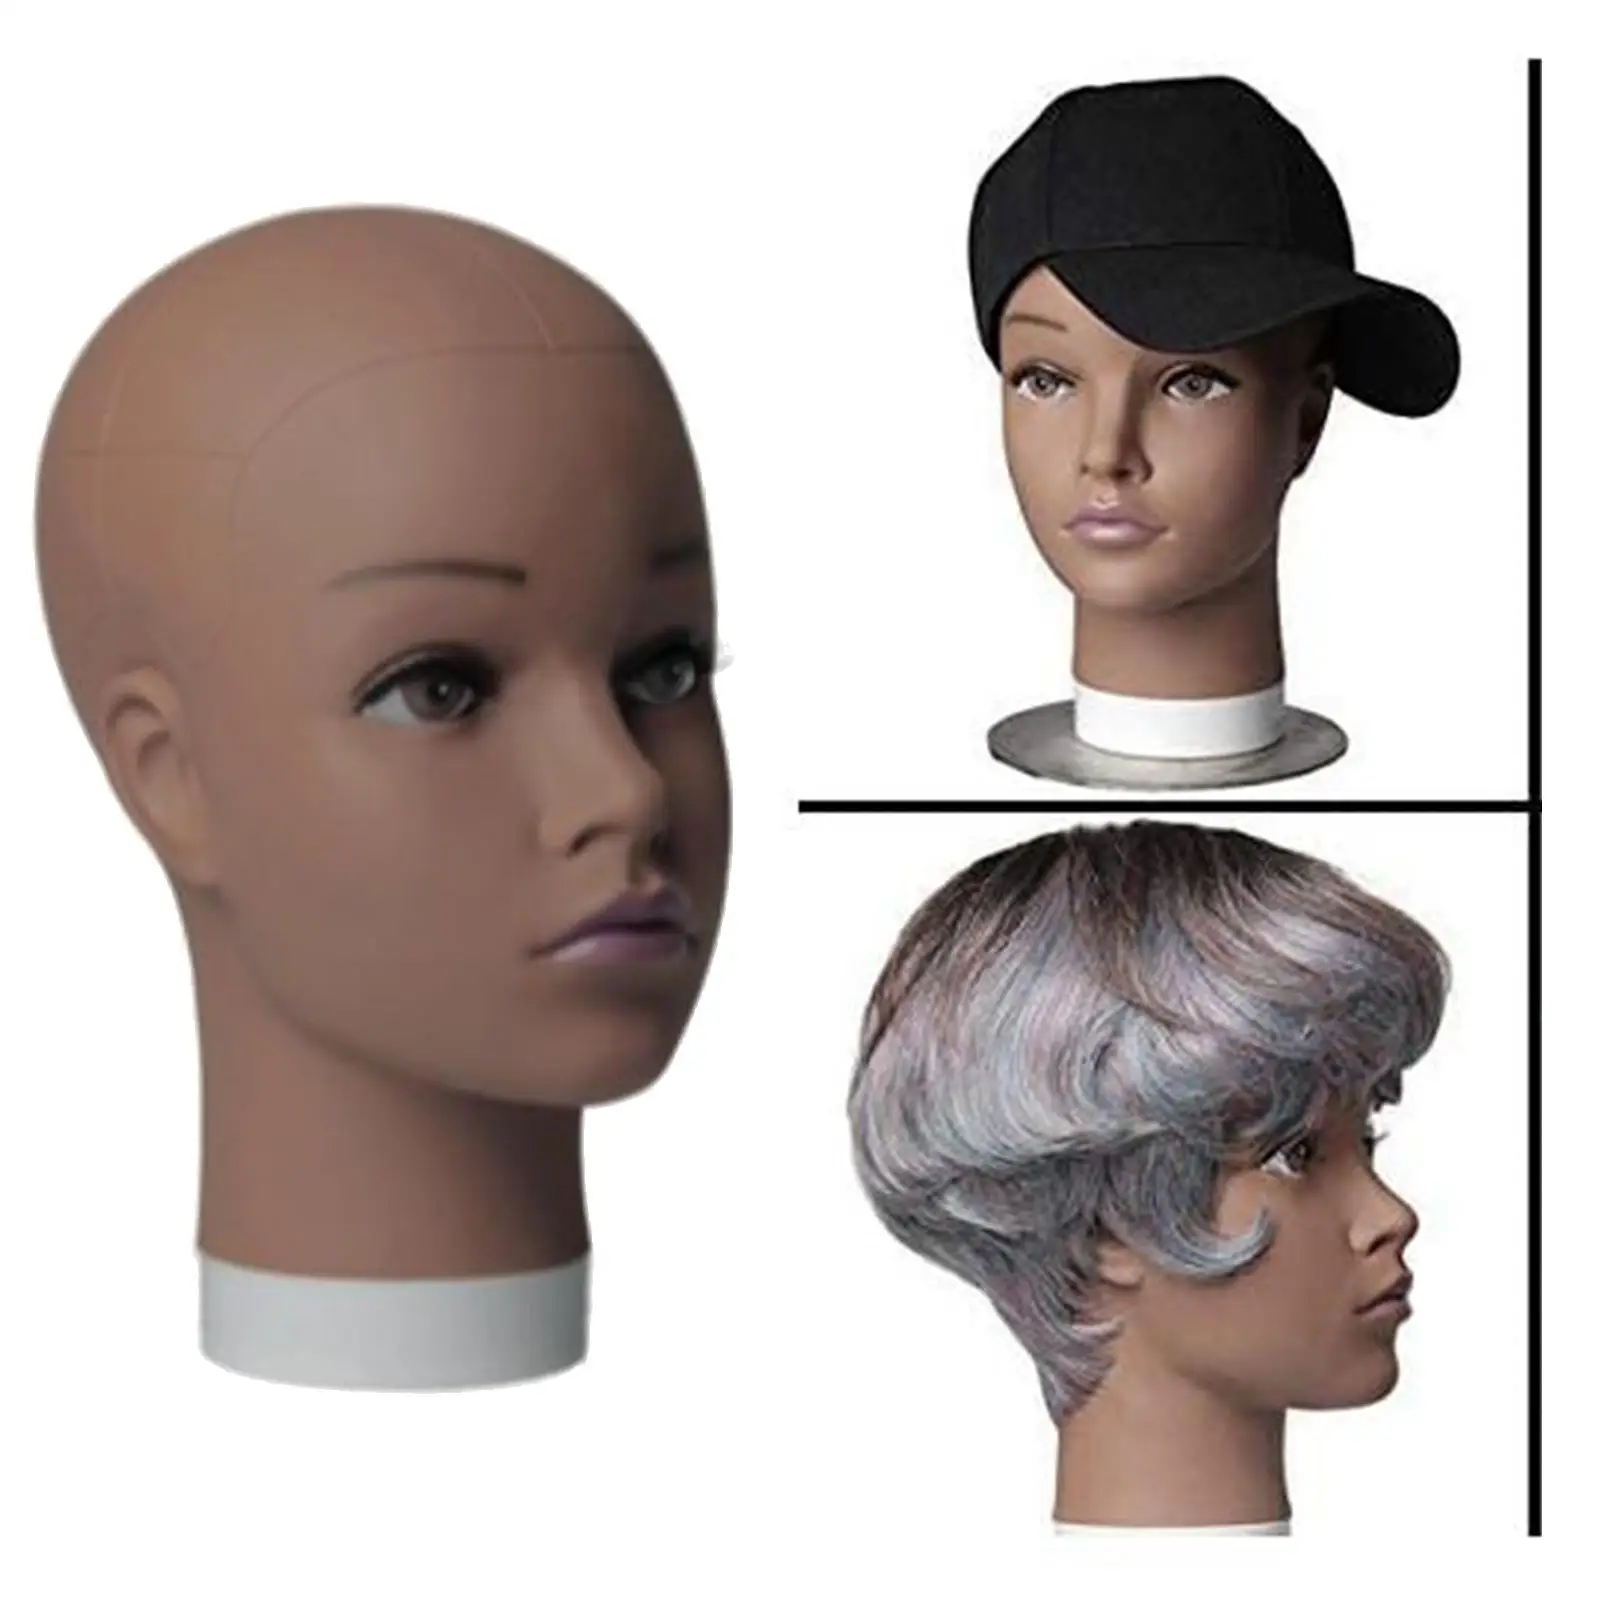  Head Model Bald Professional for Display Hat Making Wigs Glasses Display Beginner